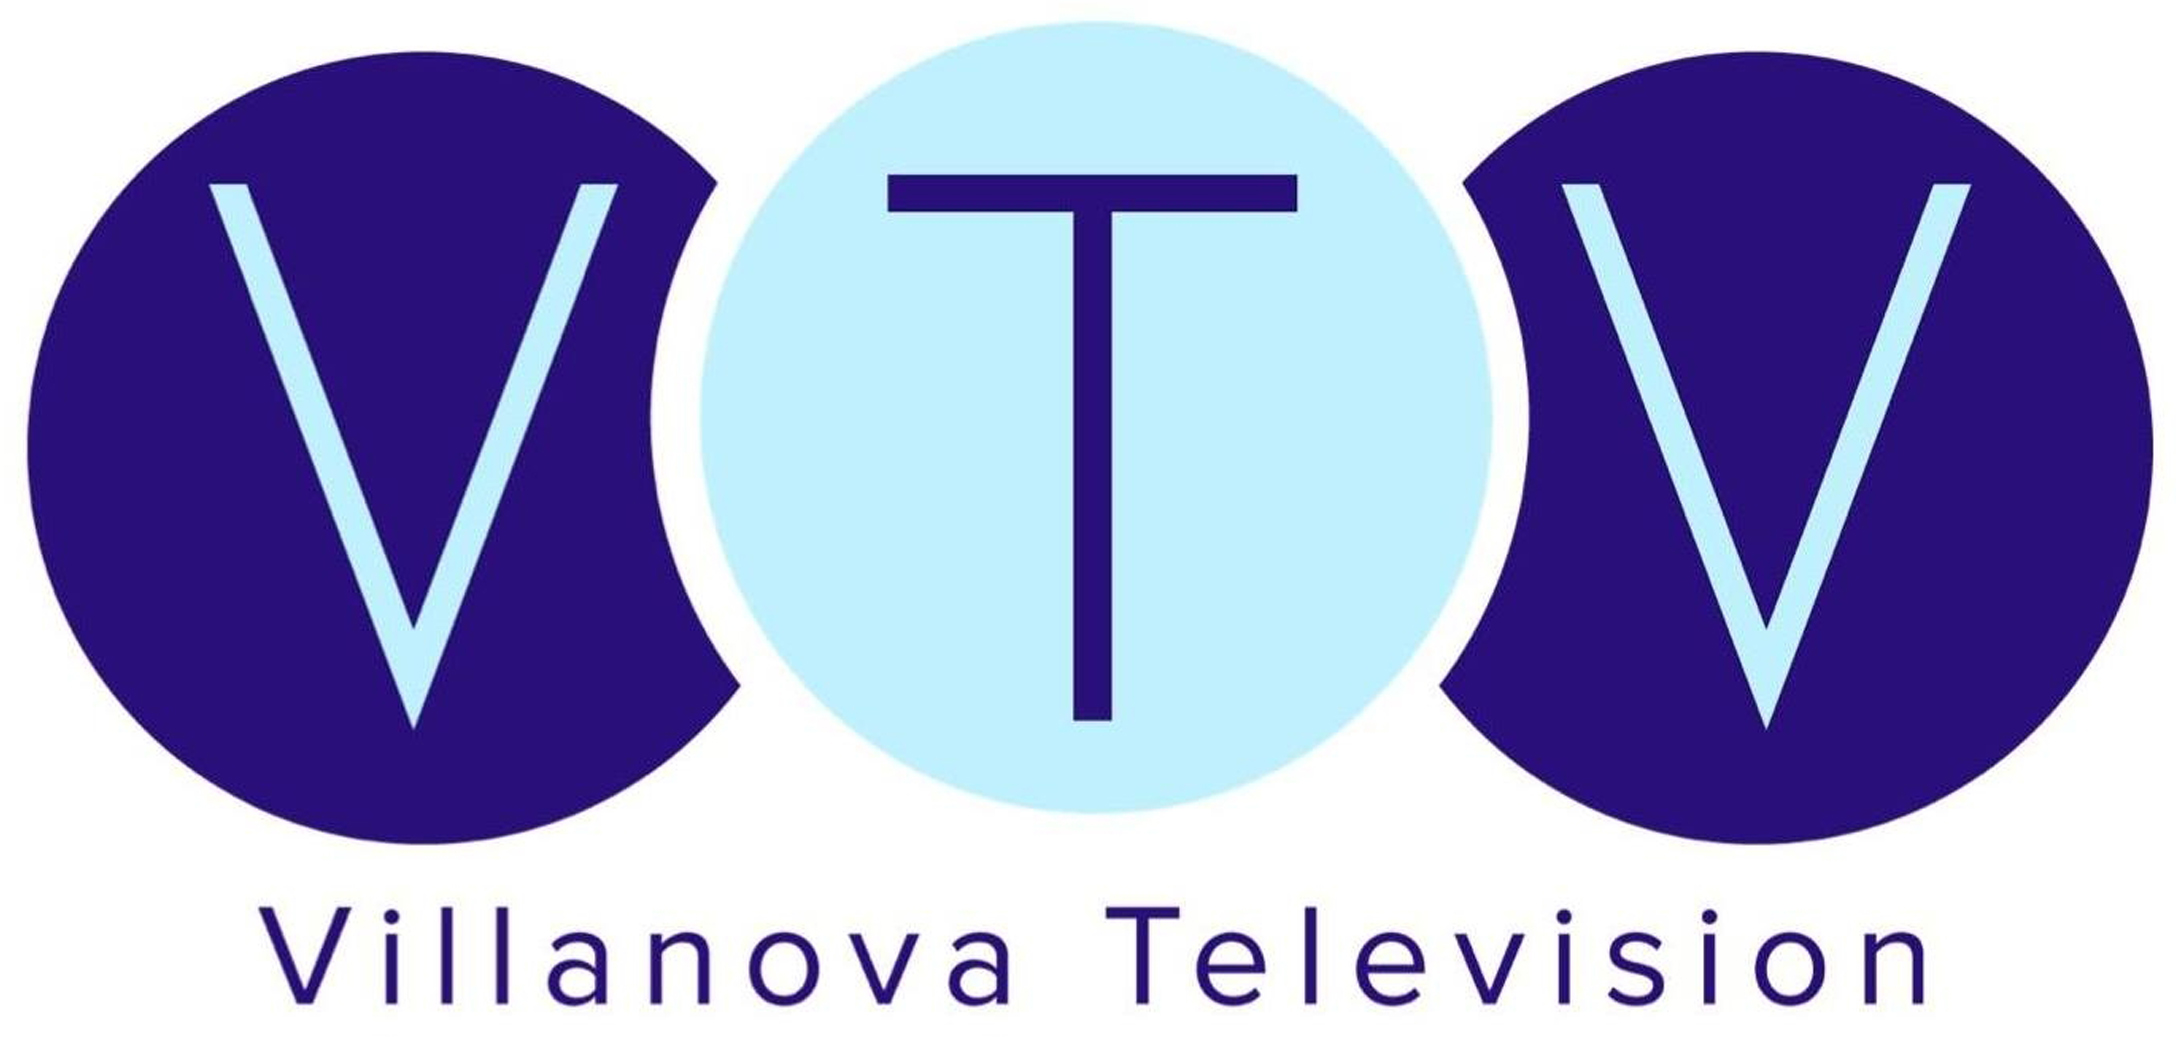 VTV: Villanova Television